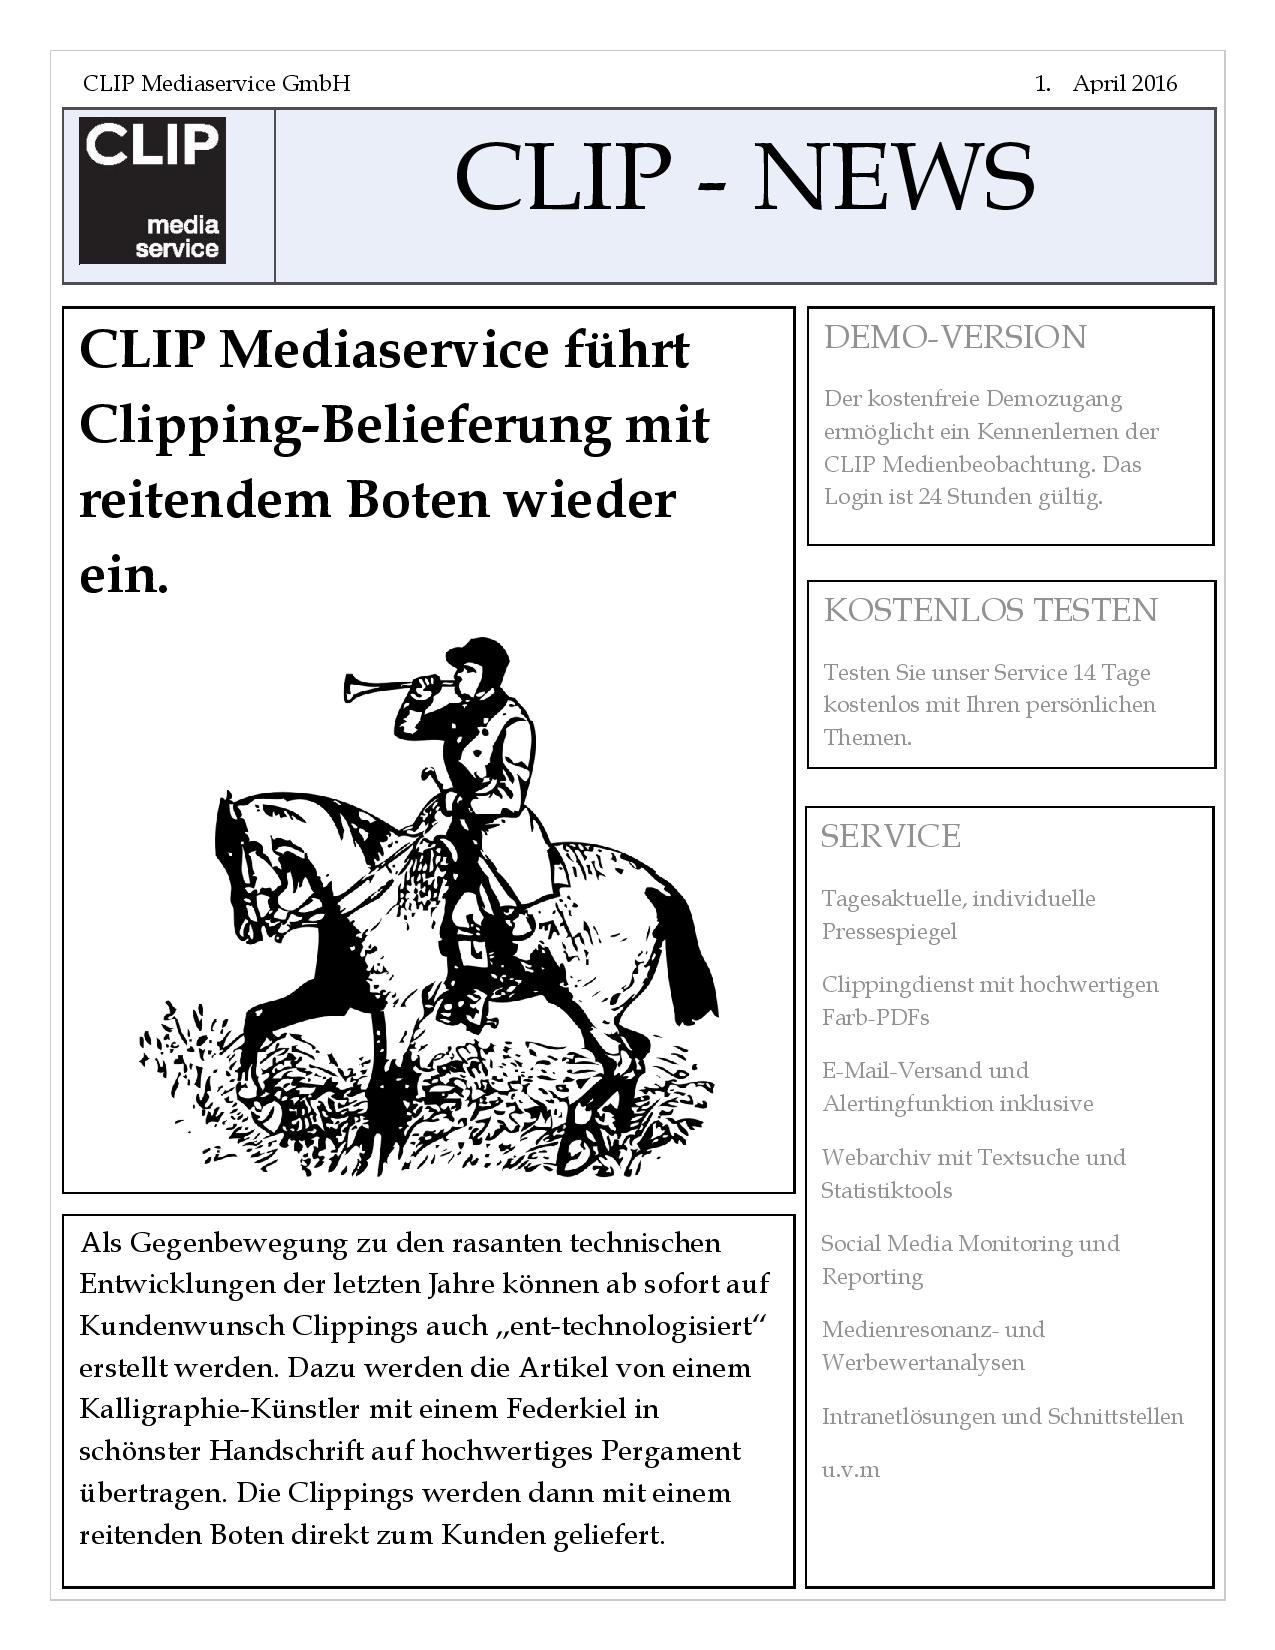 CLIP-News